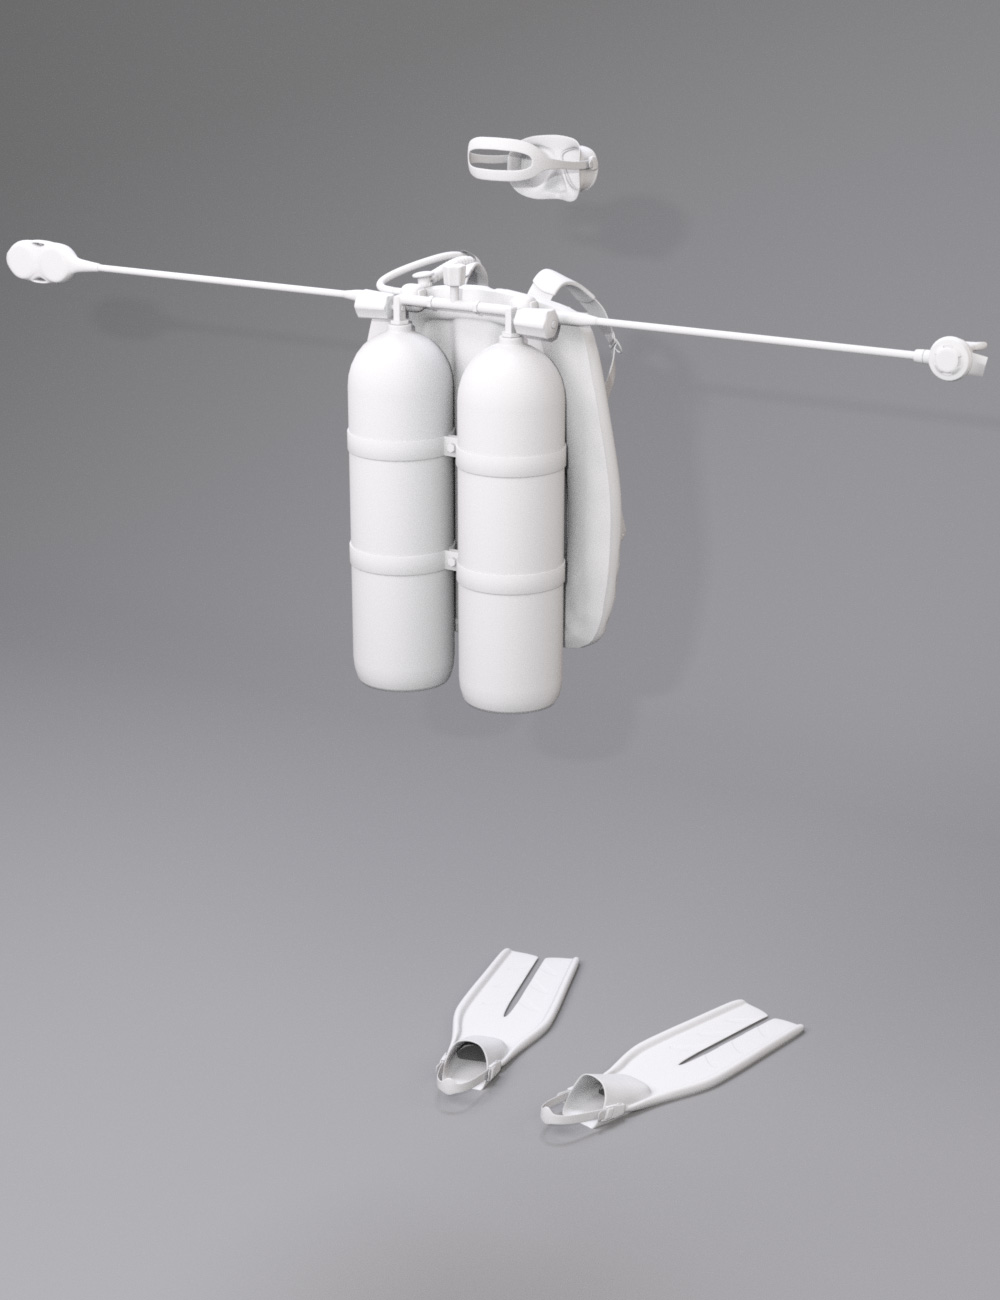 Twin-Cylinder Scuba Gear for Genesis 3 Female(s) by: HolbeinC, 3D Models by Daz 3D